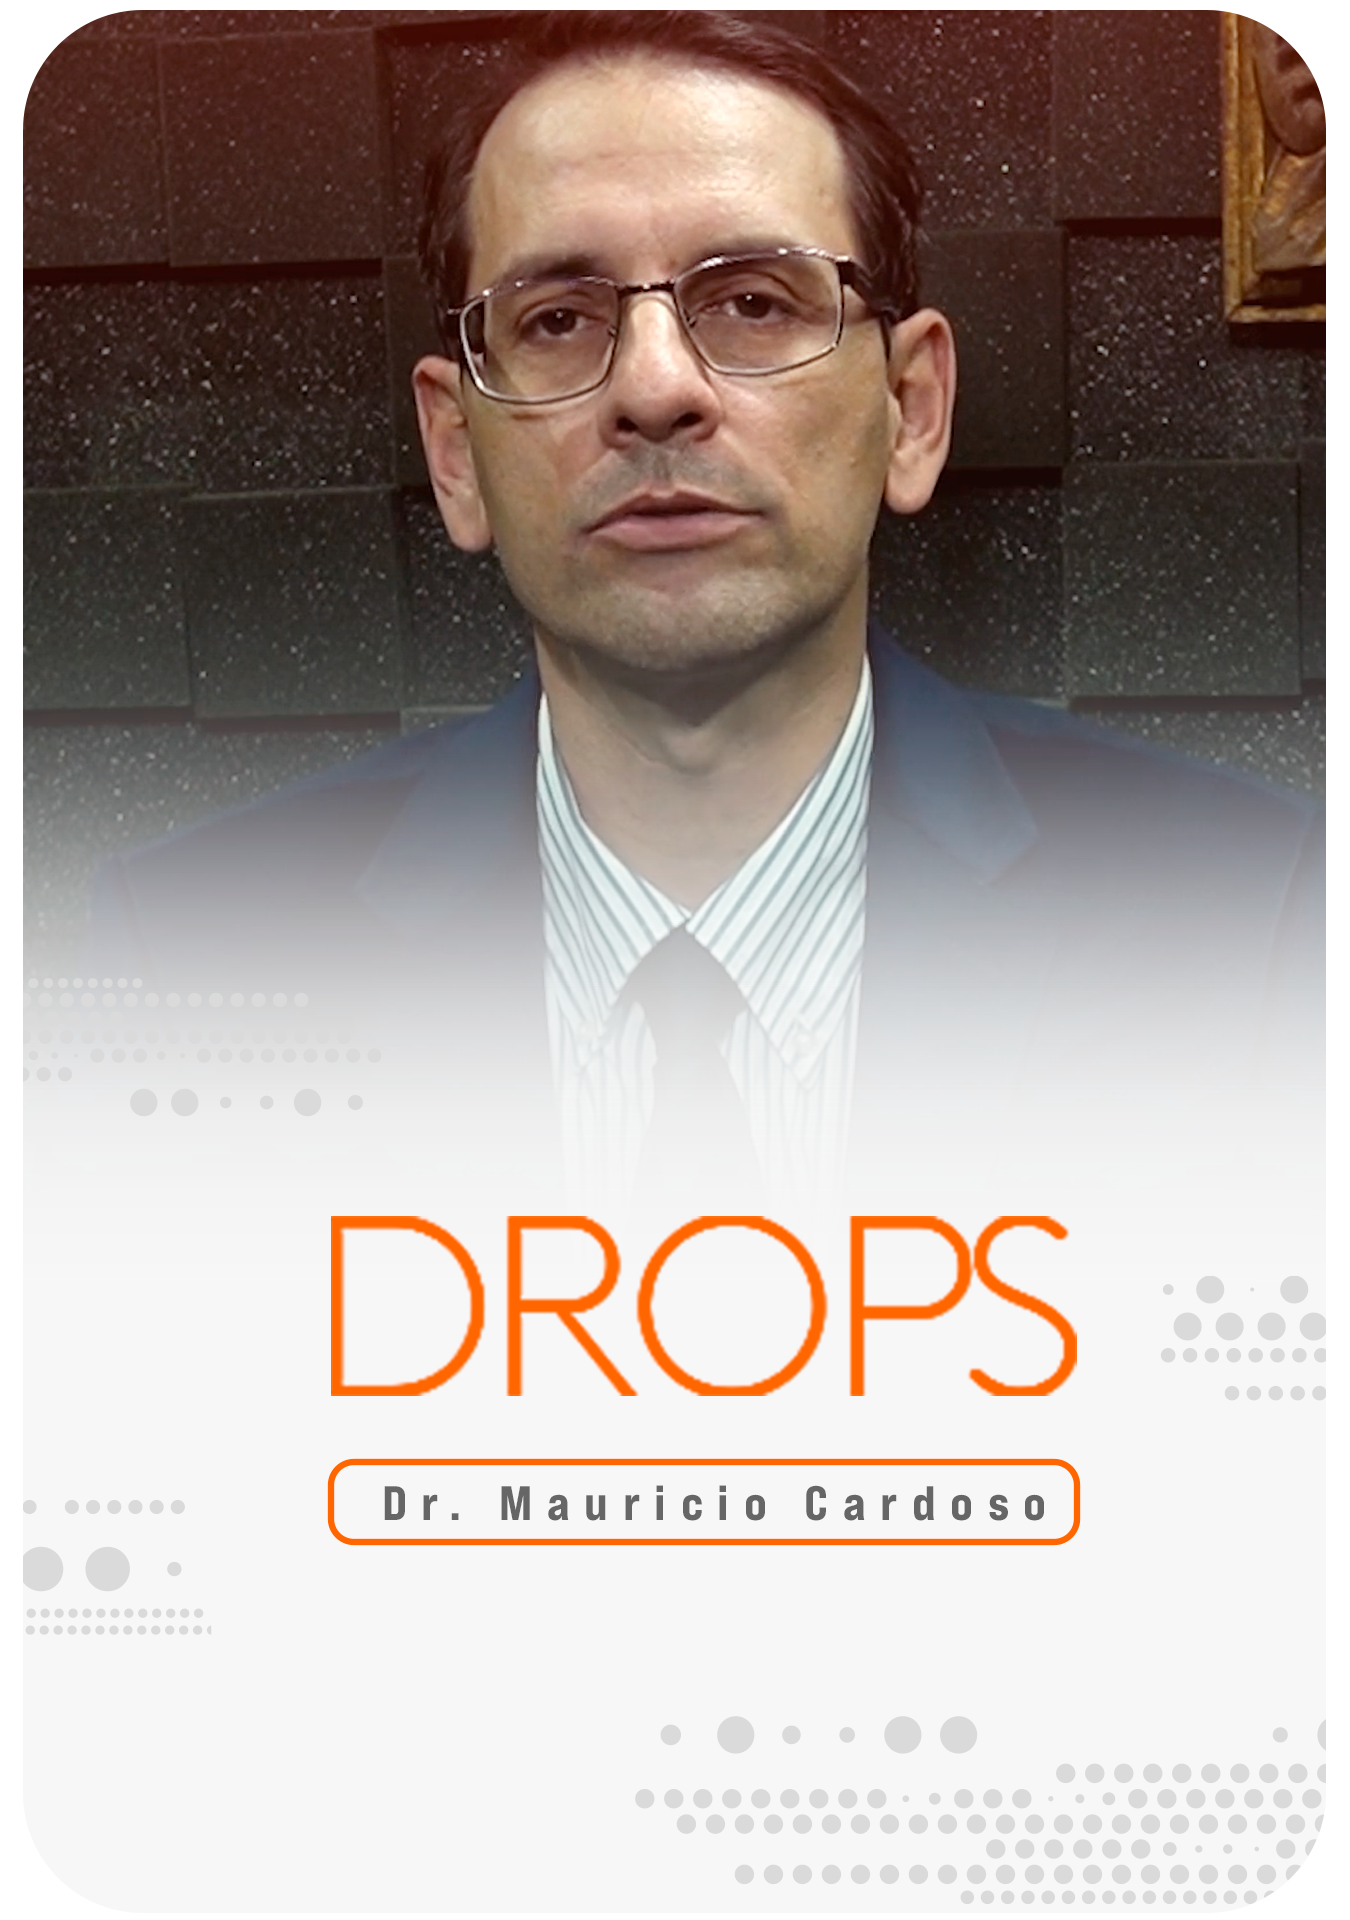 Dr. Mauricio Cardoso